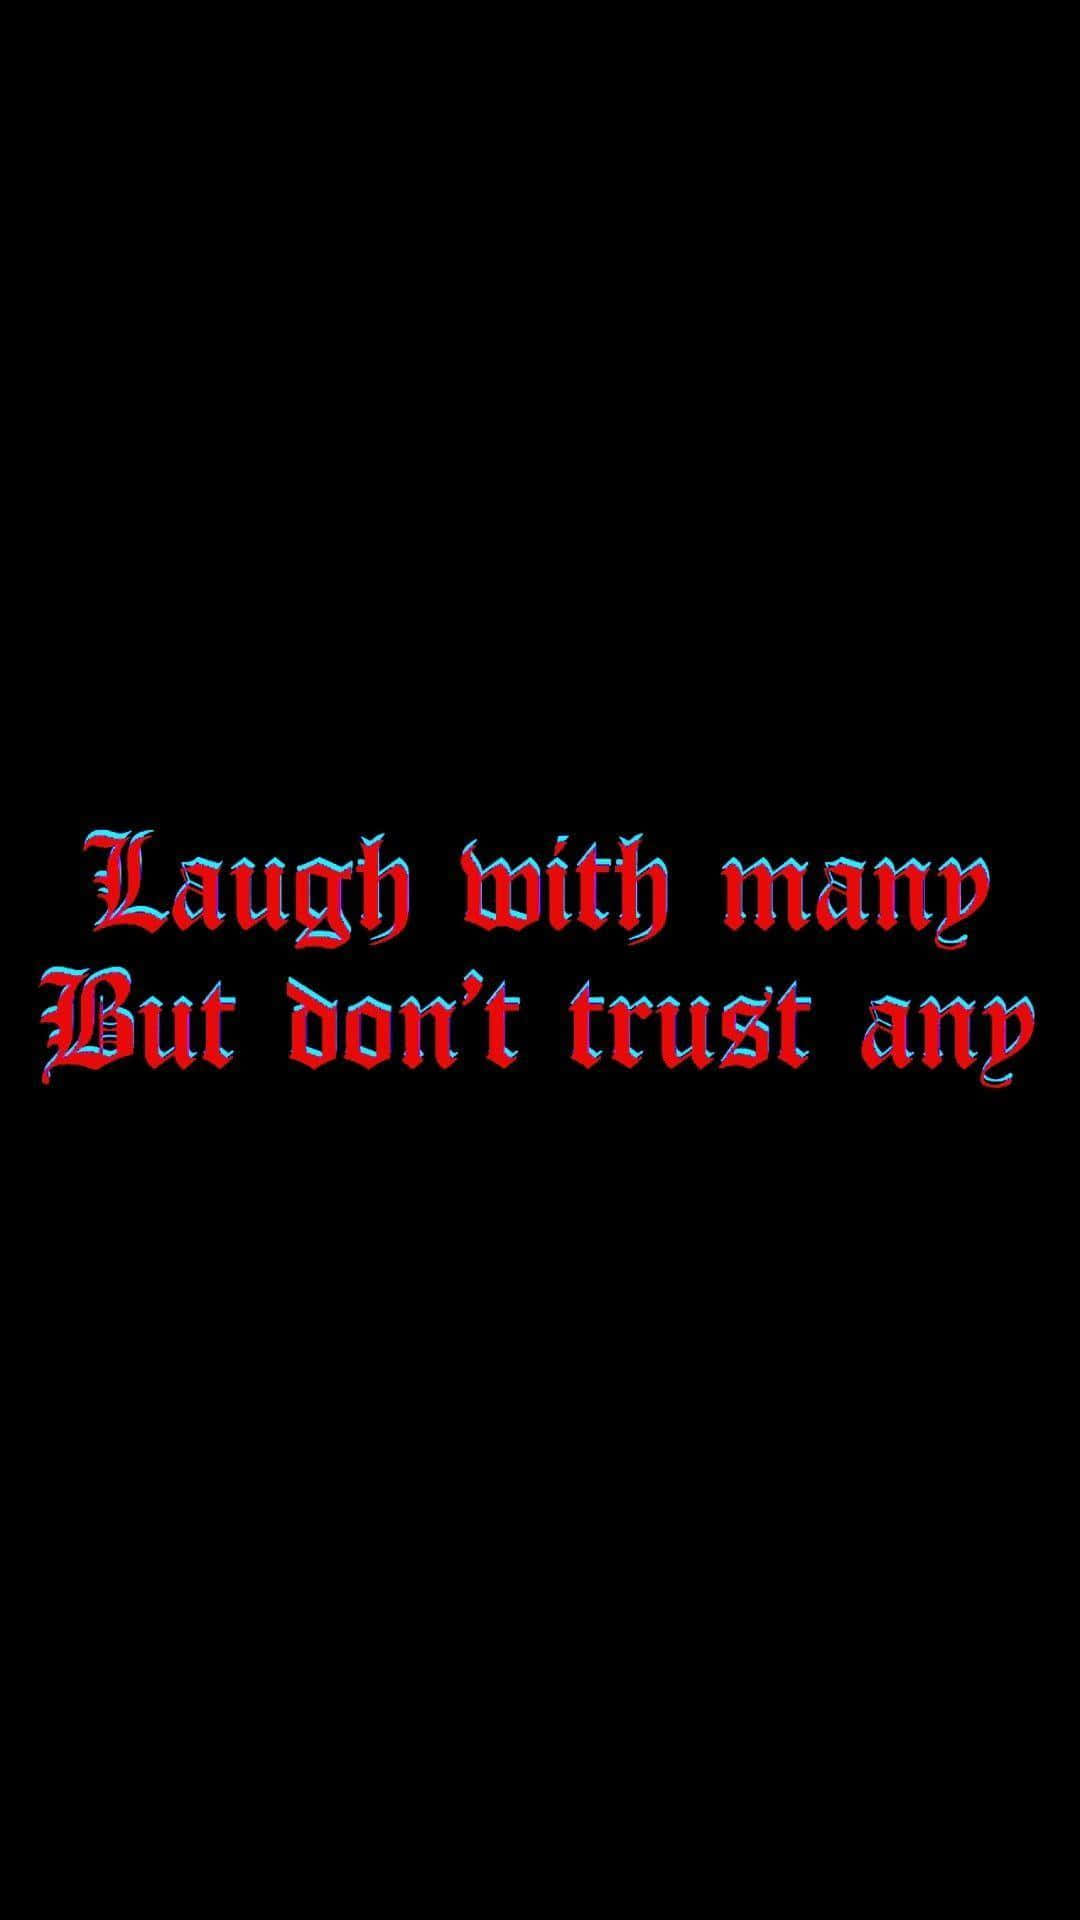 Vintage Goth Mistrust Quote Wallpaper